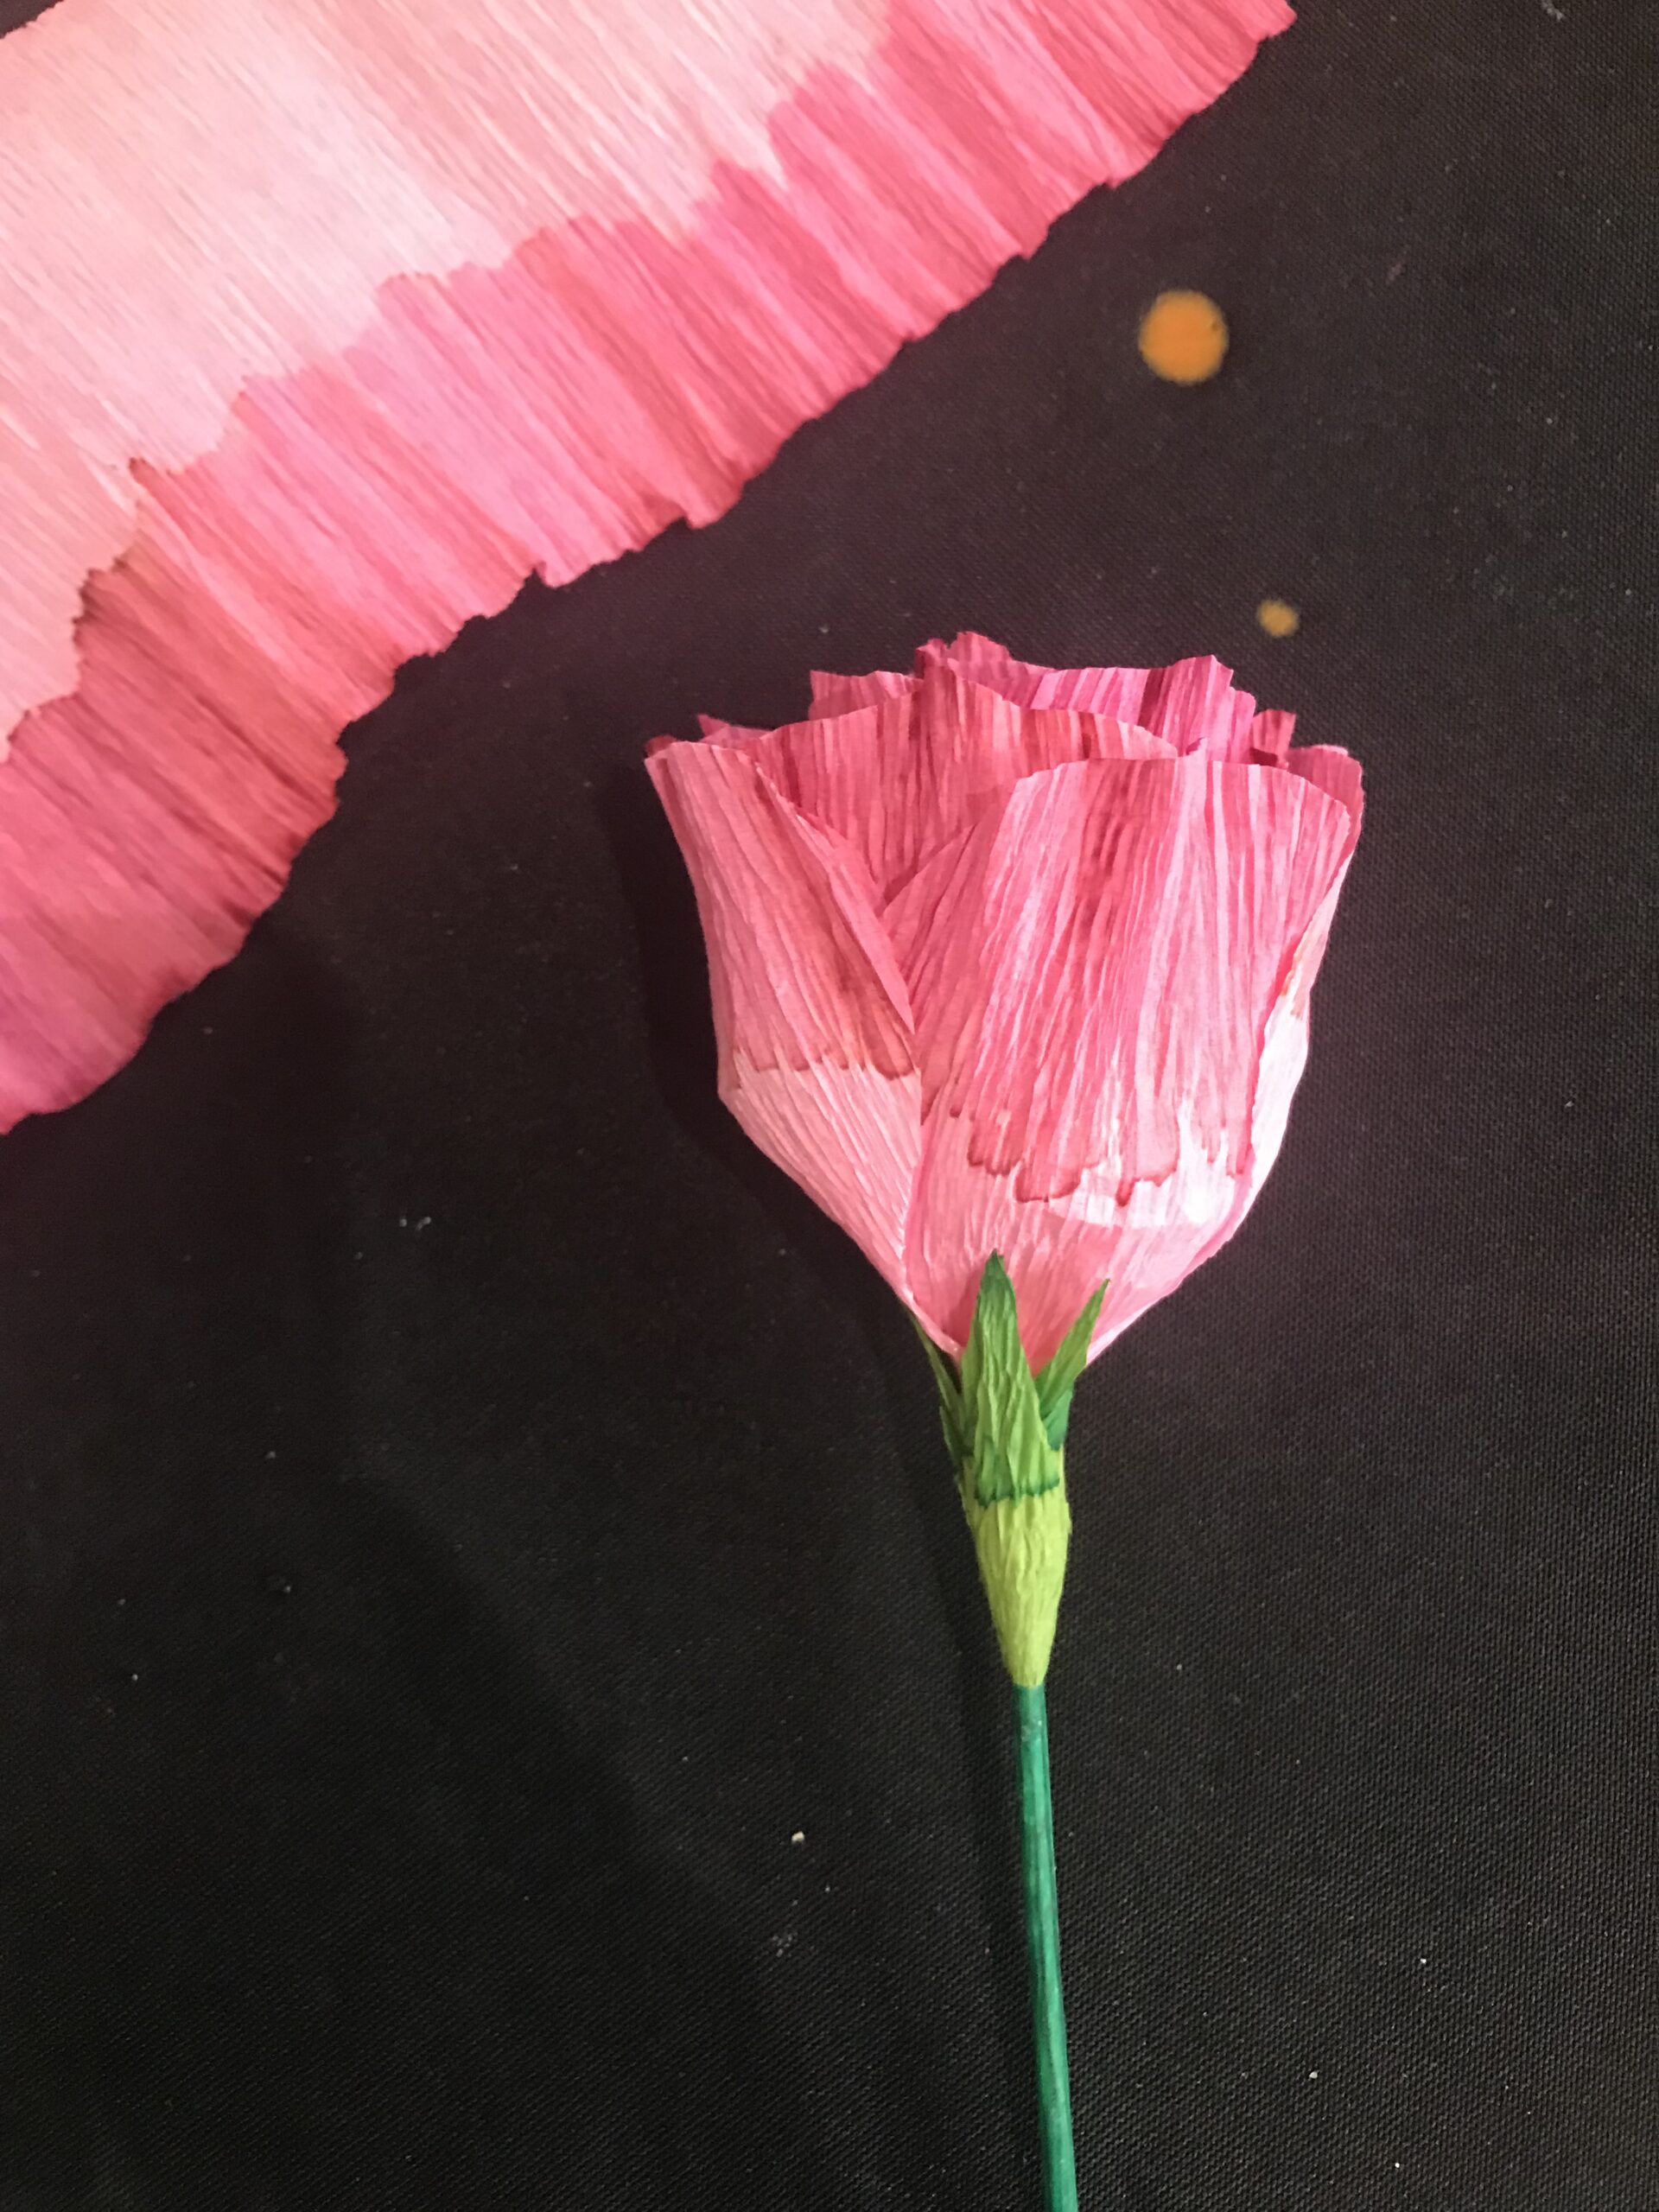 Mini-Workshop: Paper Roses